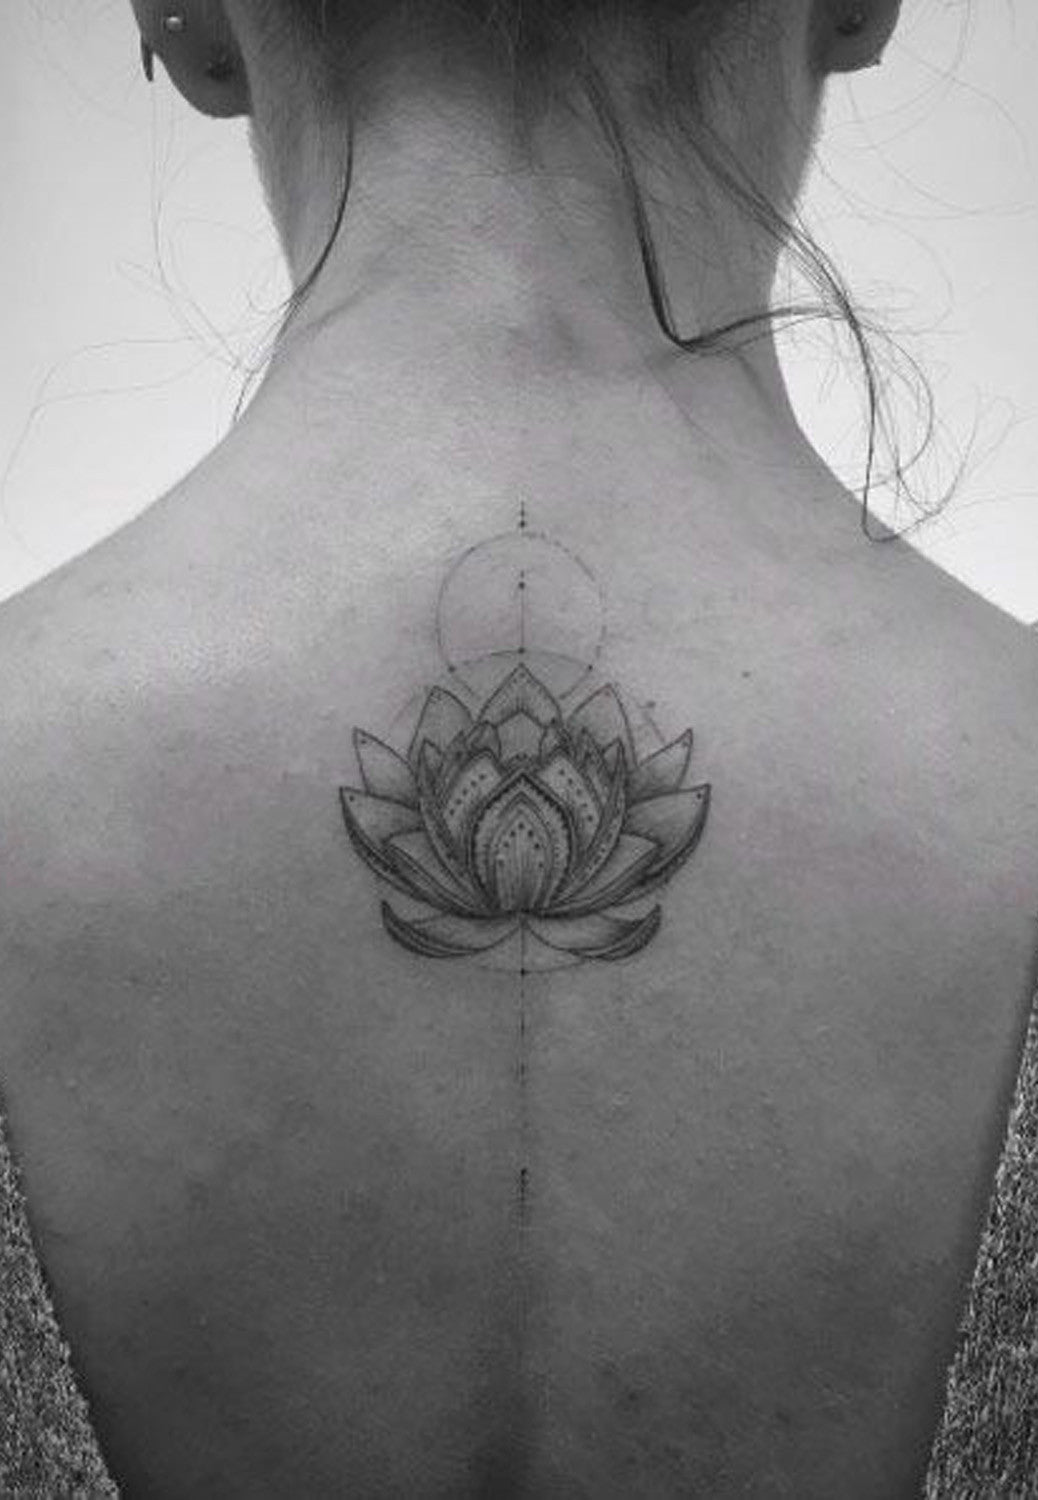 flower tattoo placement ideas